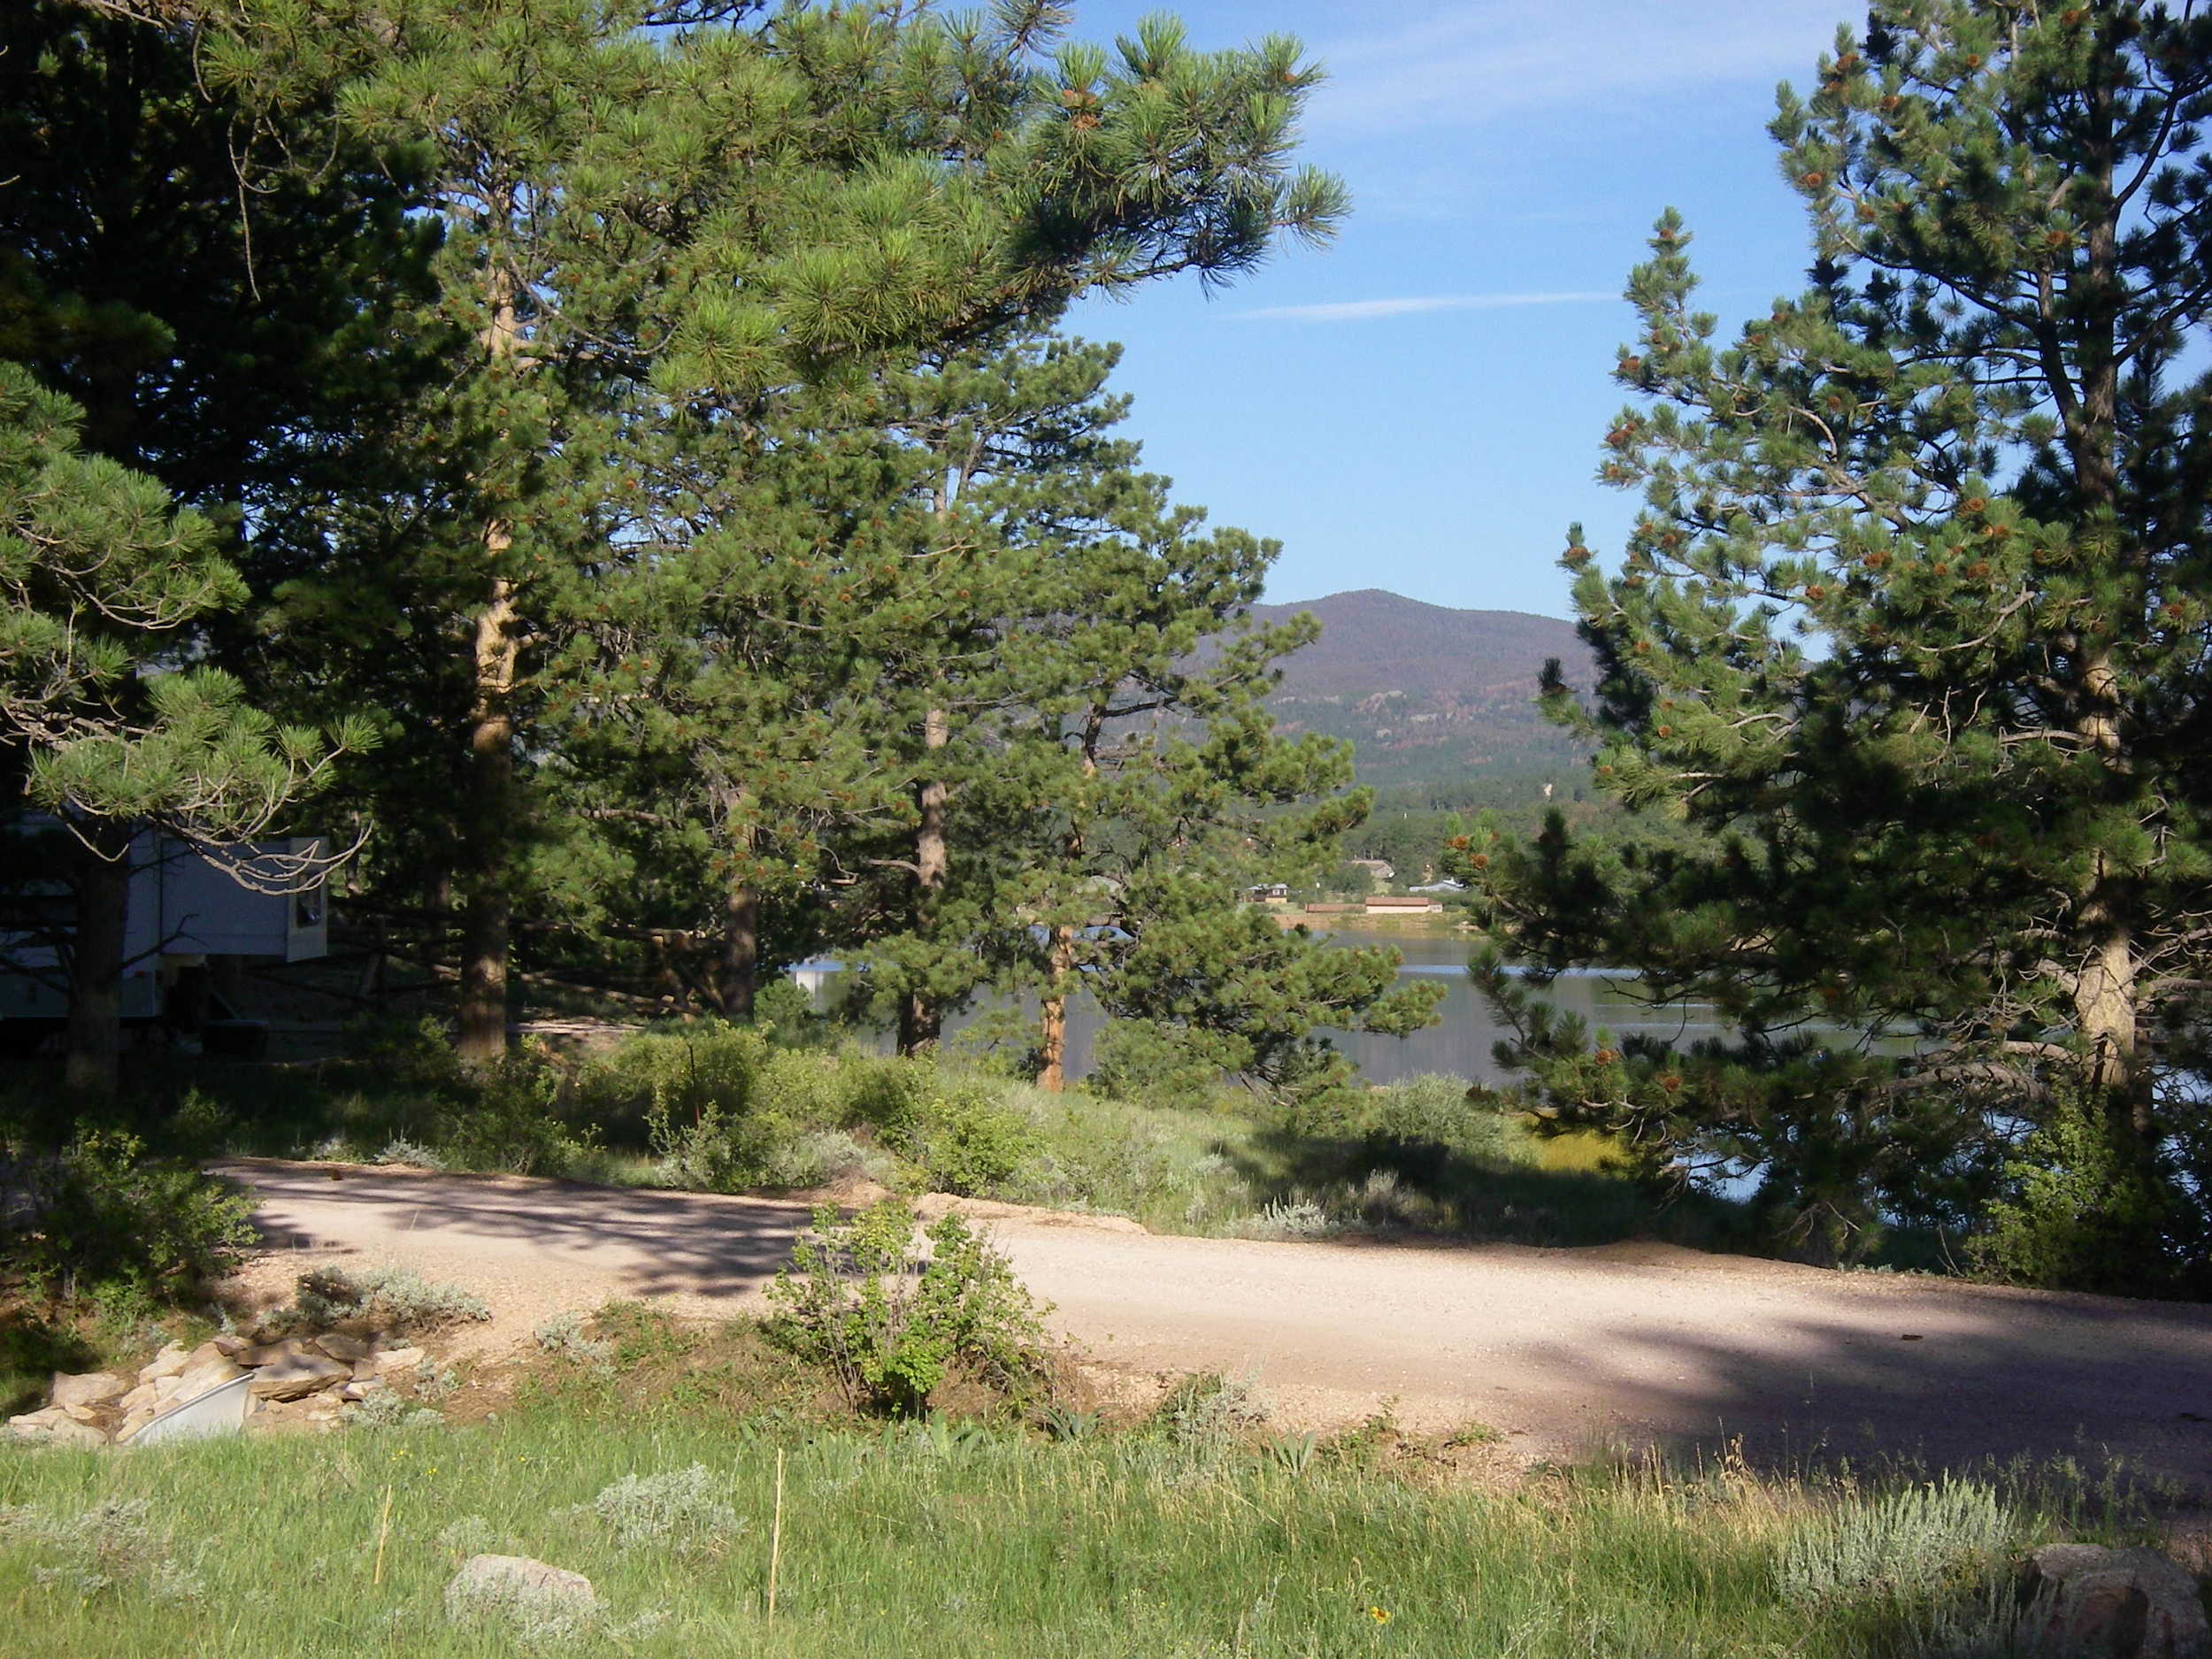 Lakefront campsites